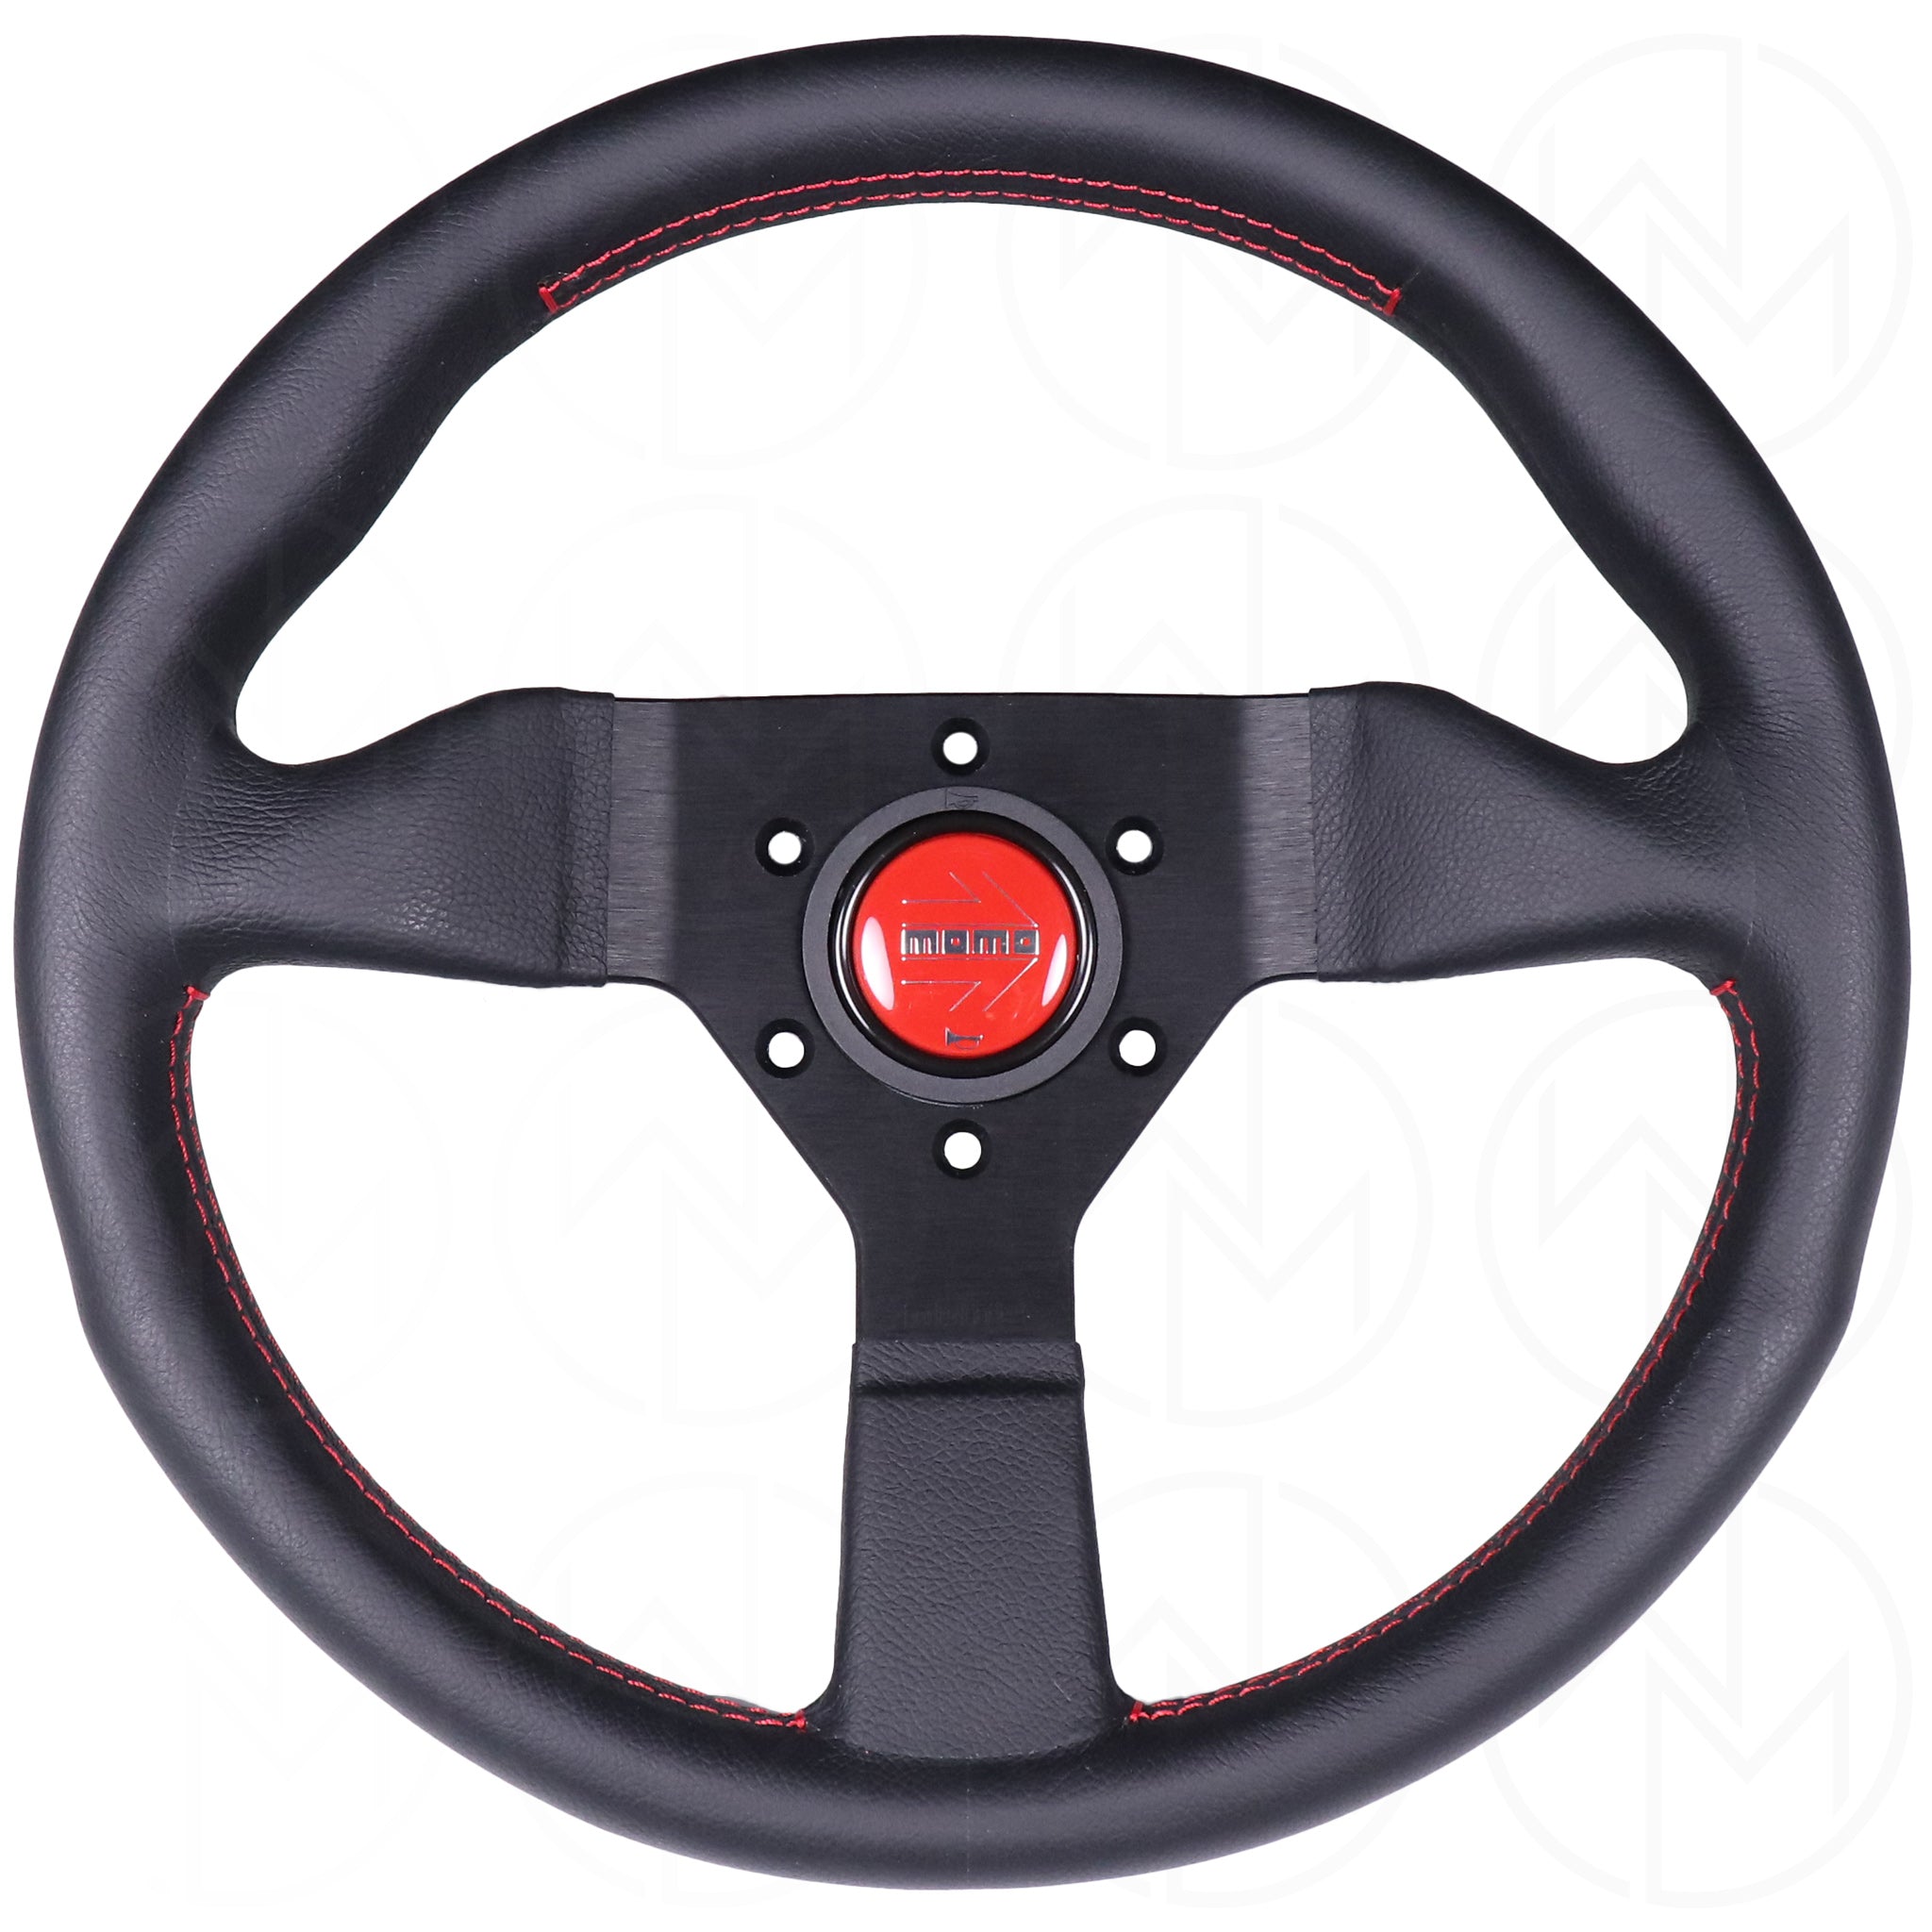 Momo Monte Carlo Steering Wheel 350mm Leather W Red Stitch Wheel Mod Wheelmod